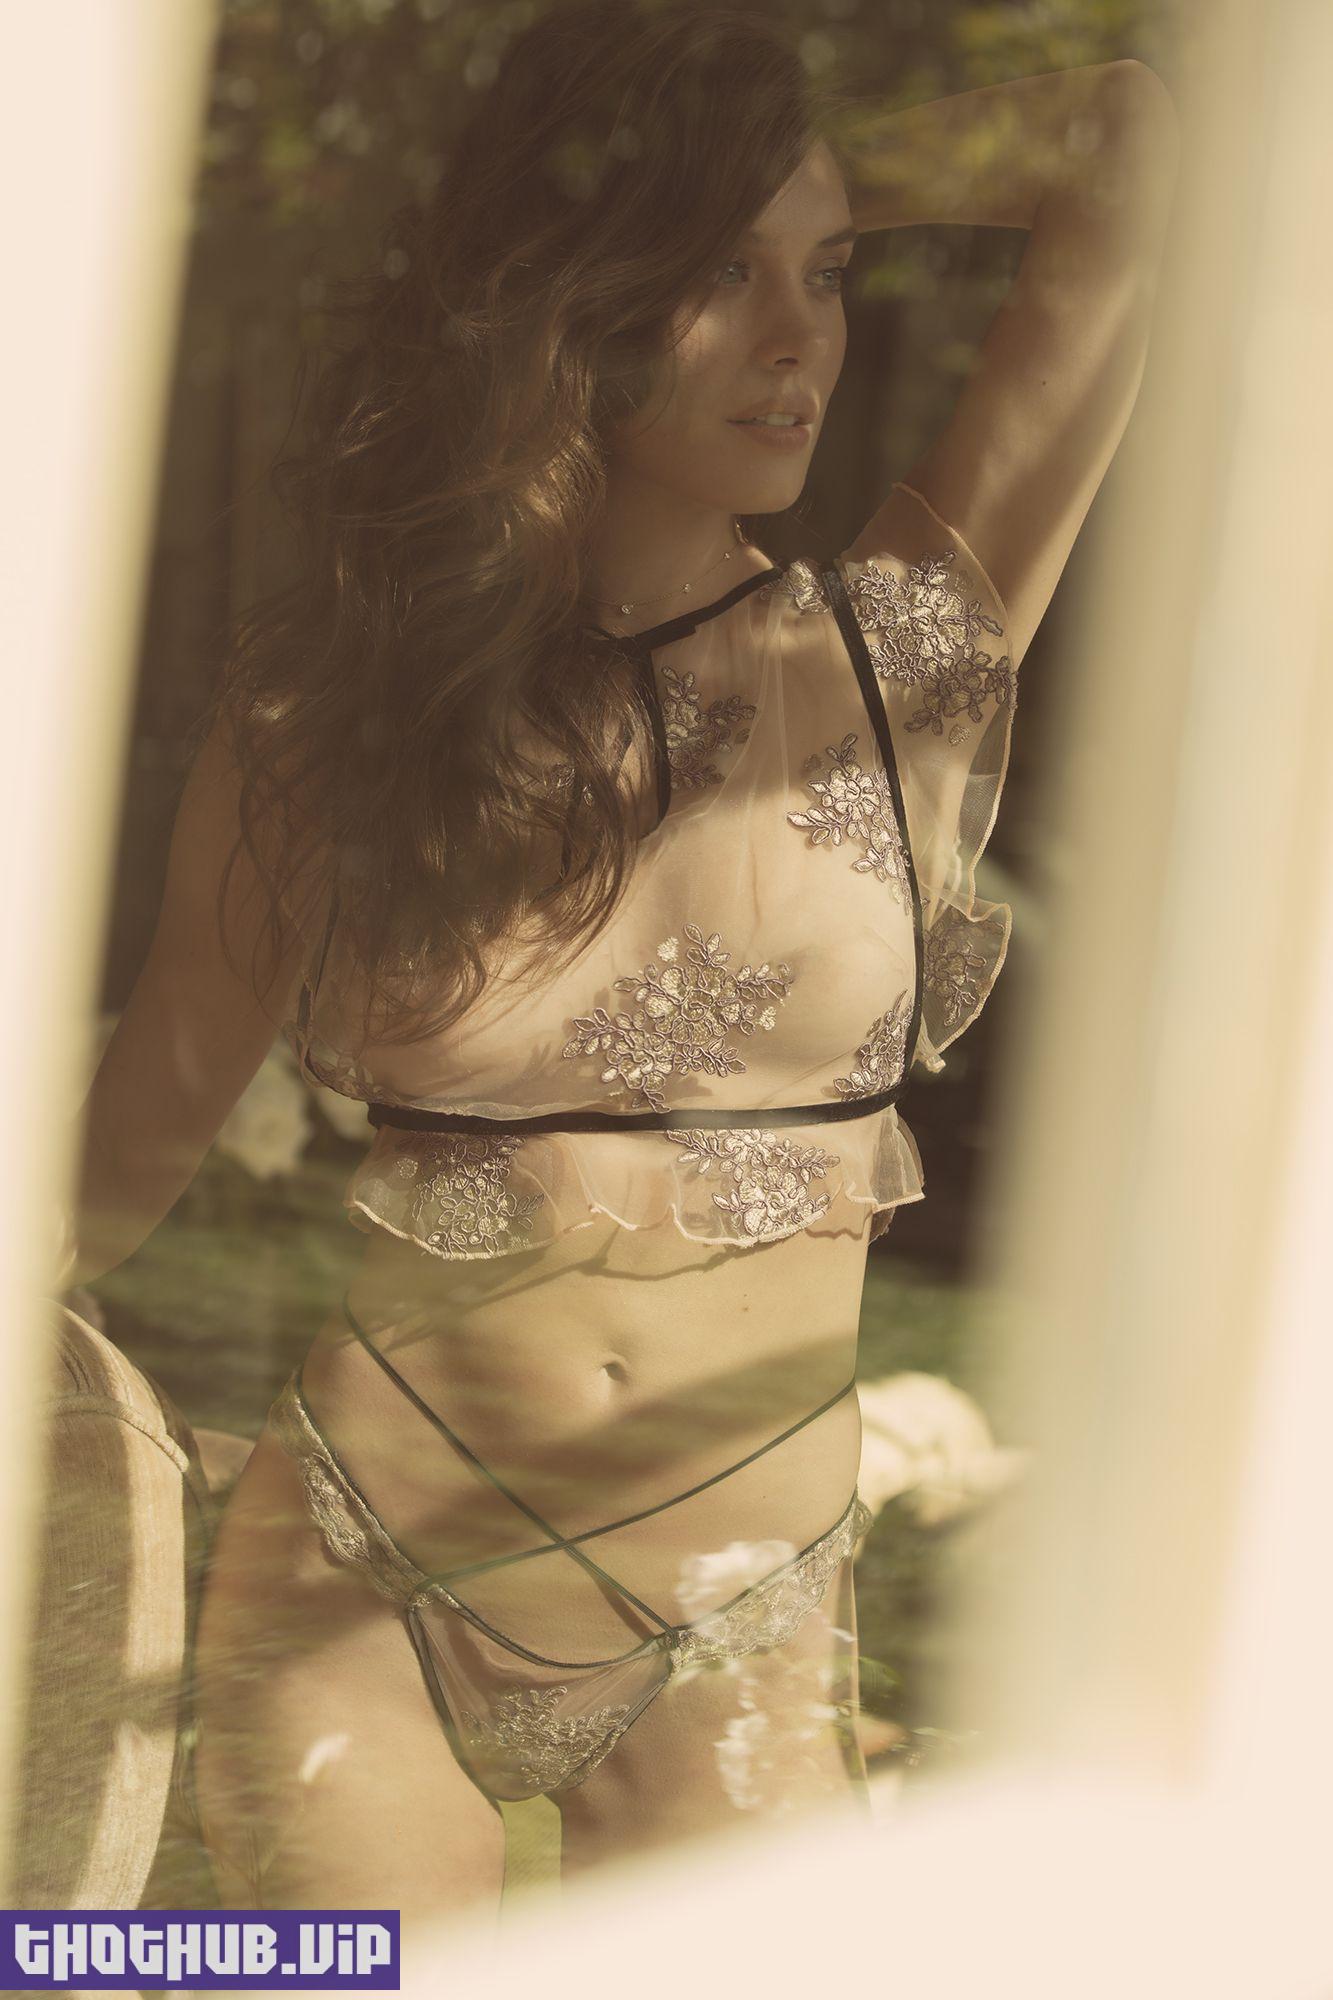 Kayla Jean Garvin Nude Photos Shoot for Playboy